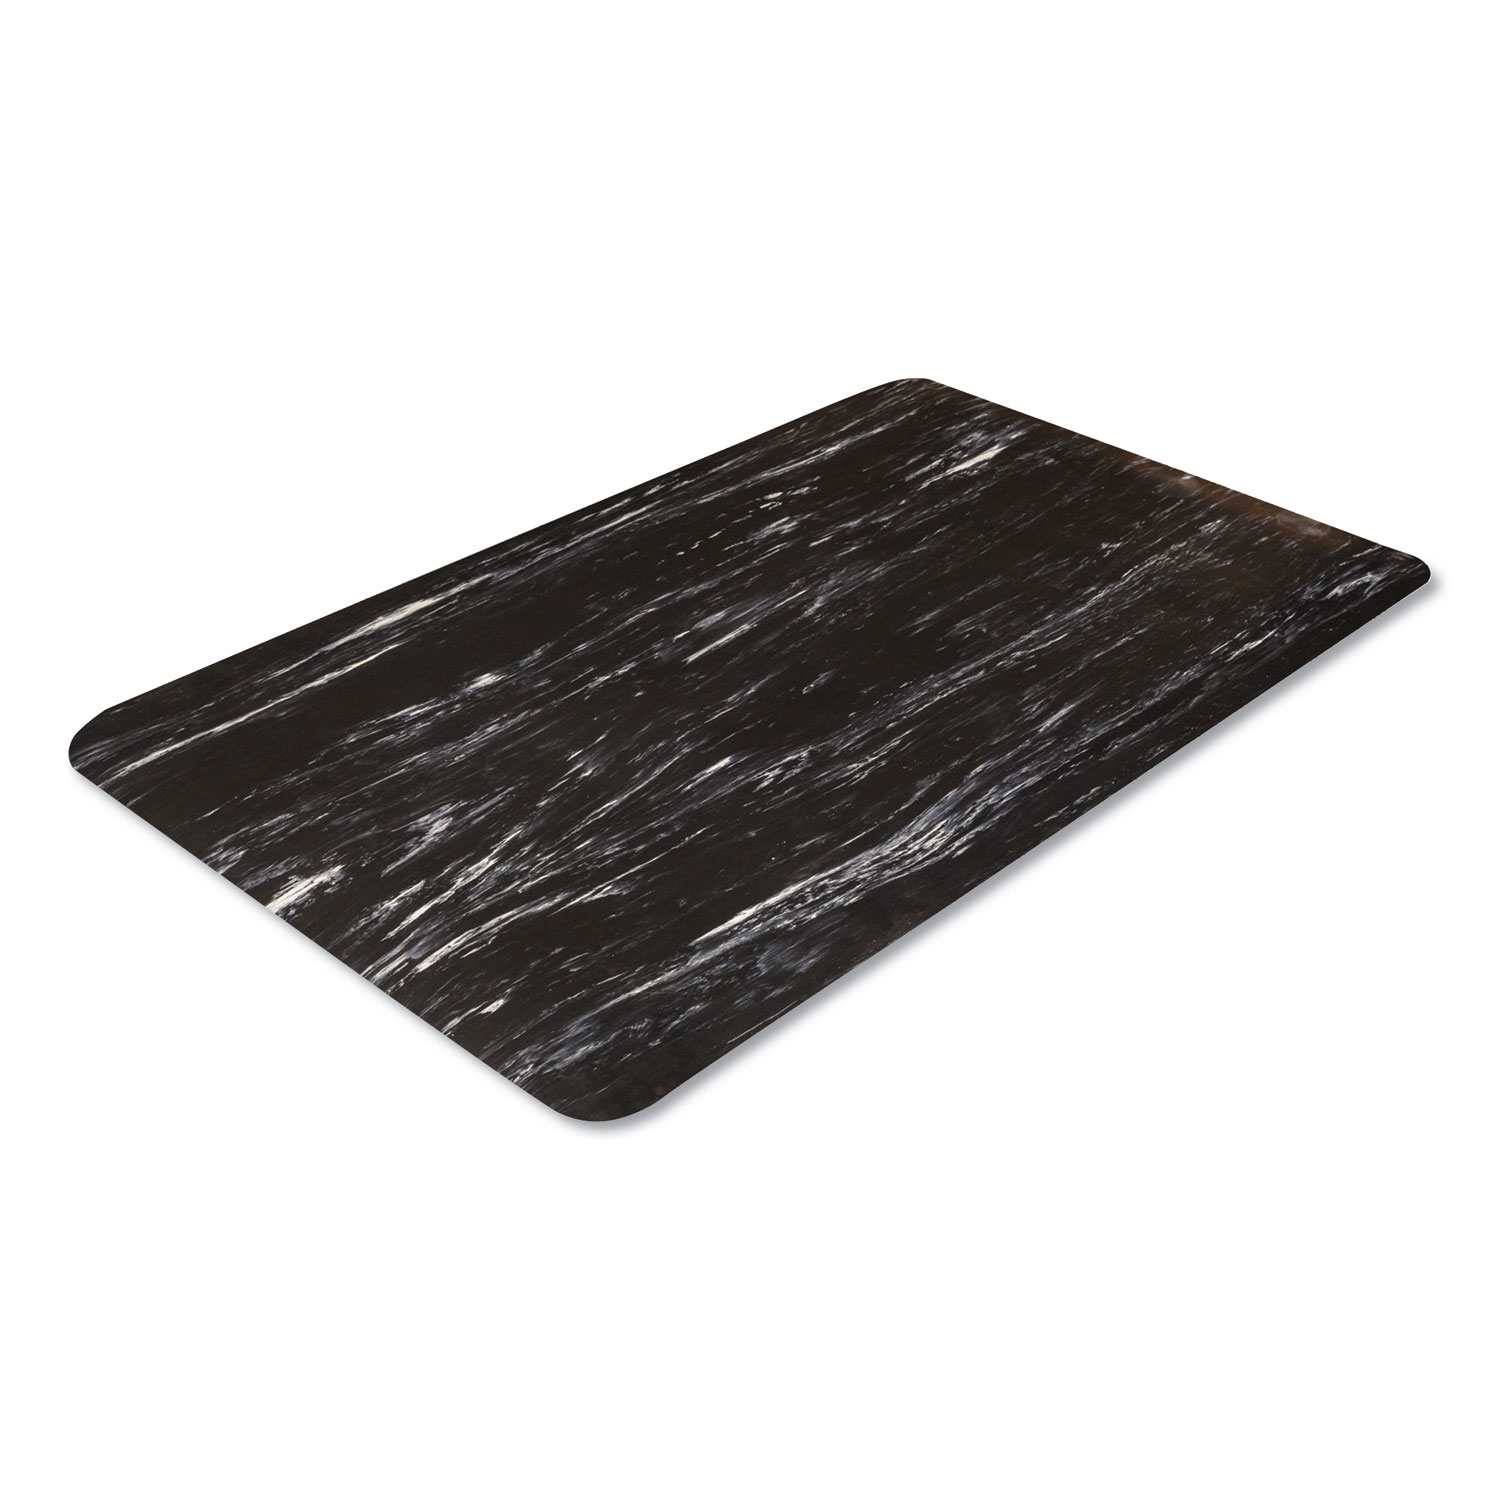  Crown CU 3660BK Cushion-Step Surface Mat, 36 x 60, Marbleized Rubber, Black (CWNCU3660BK) 